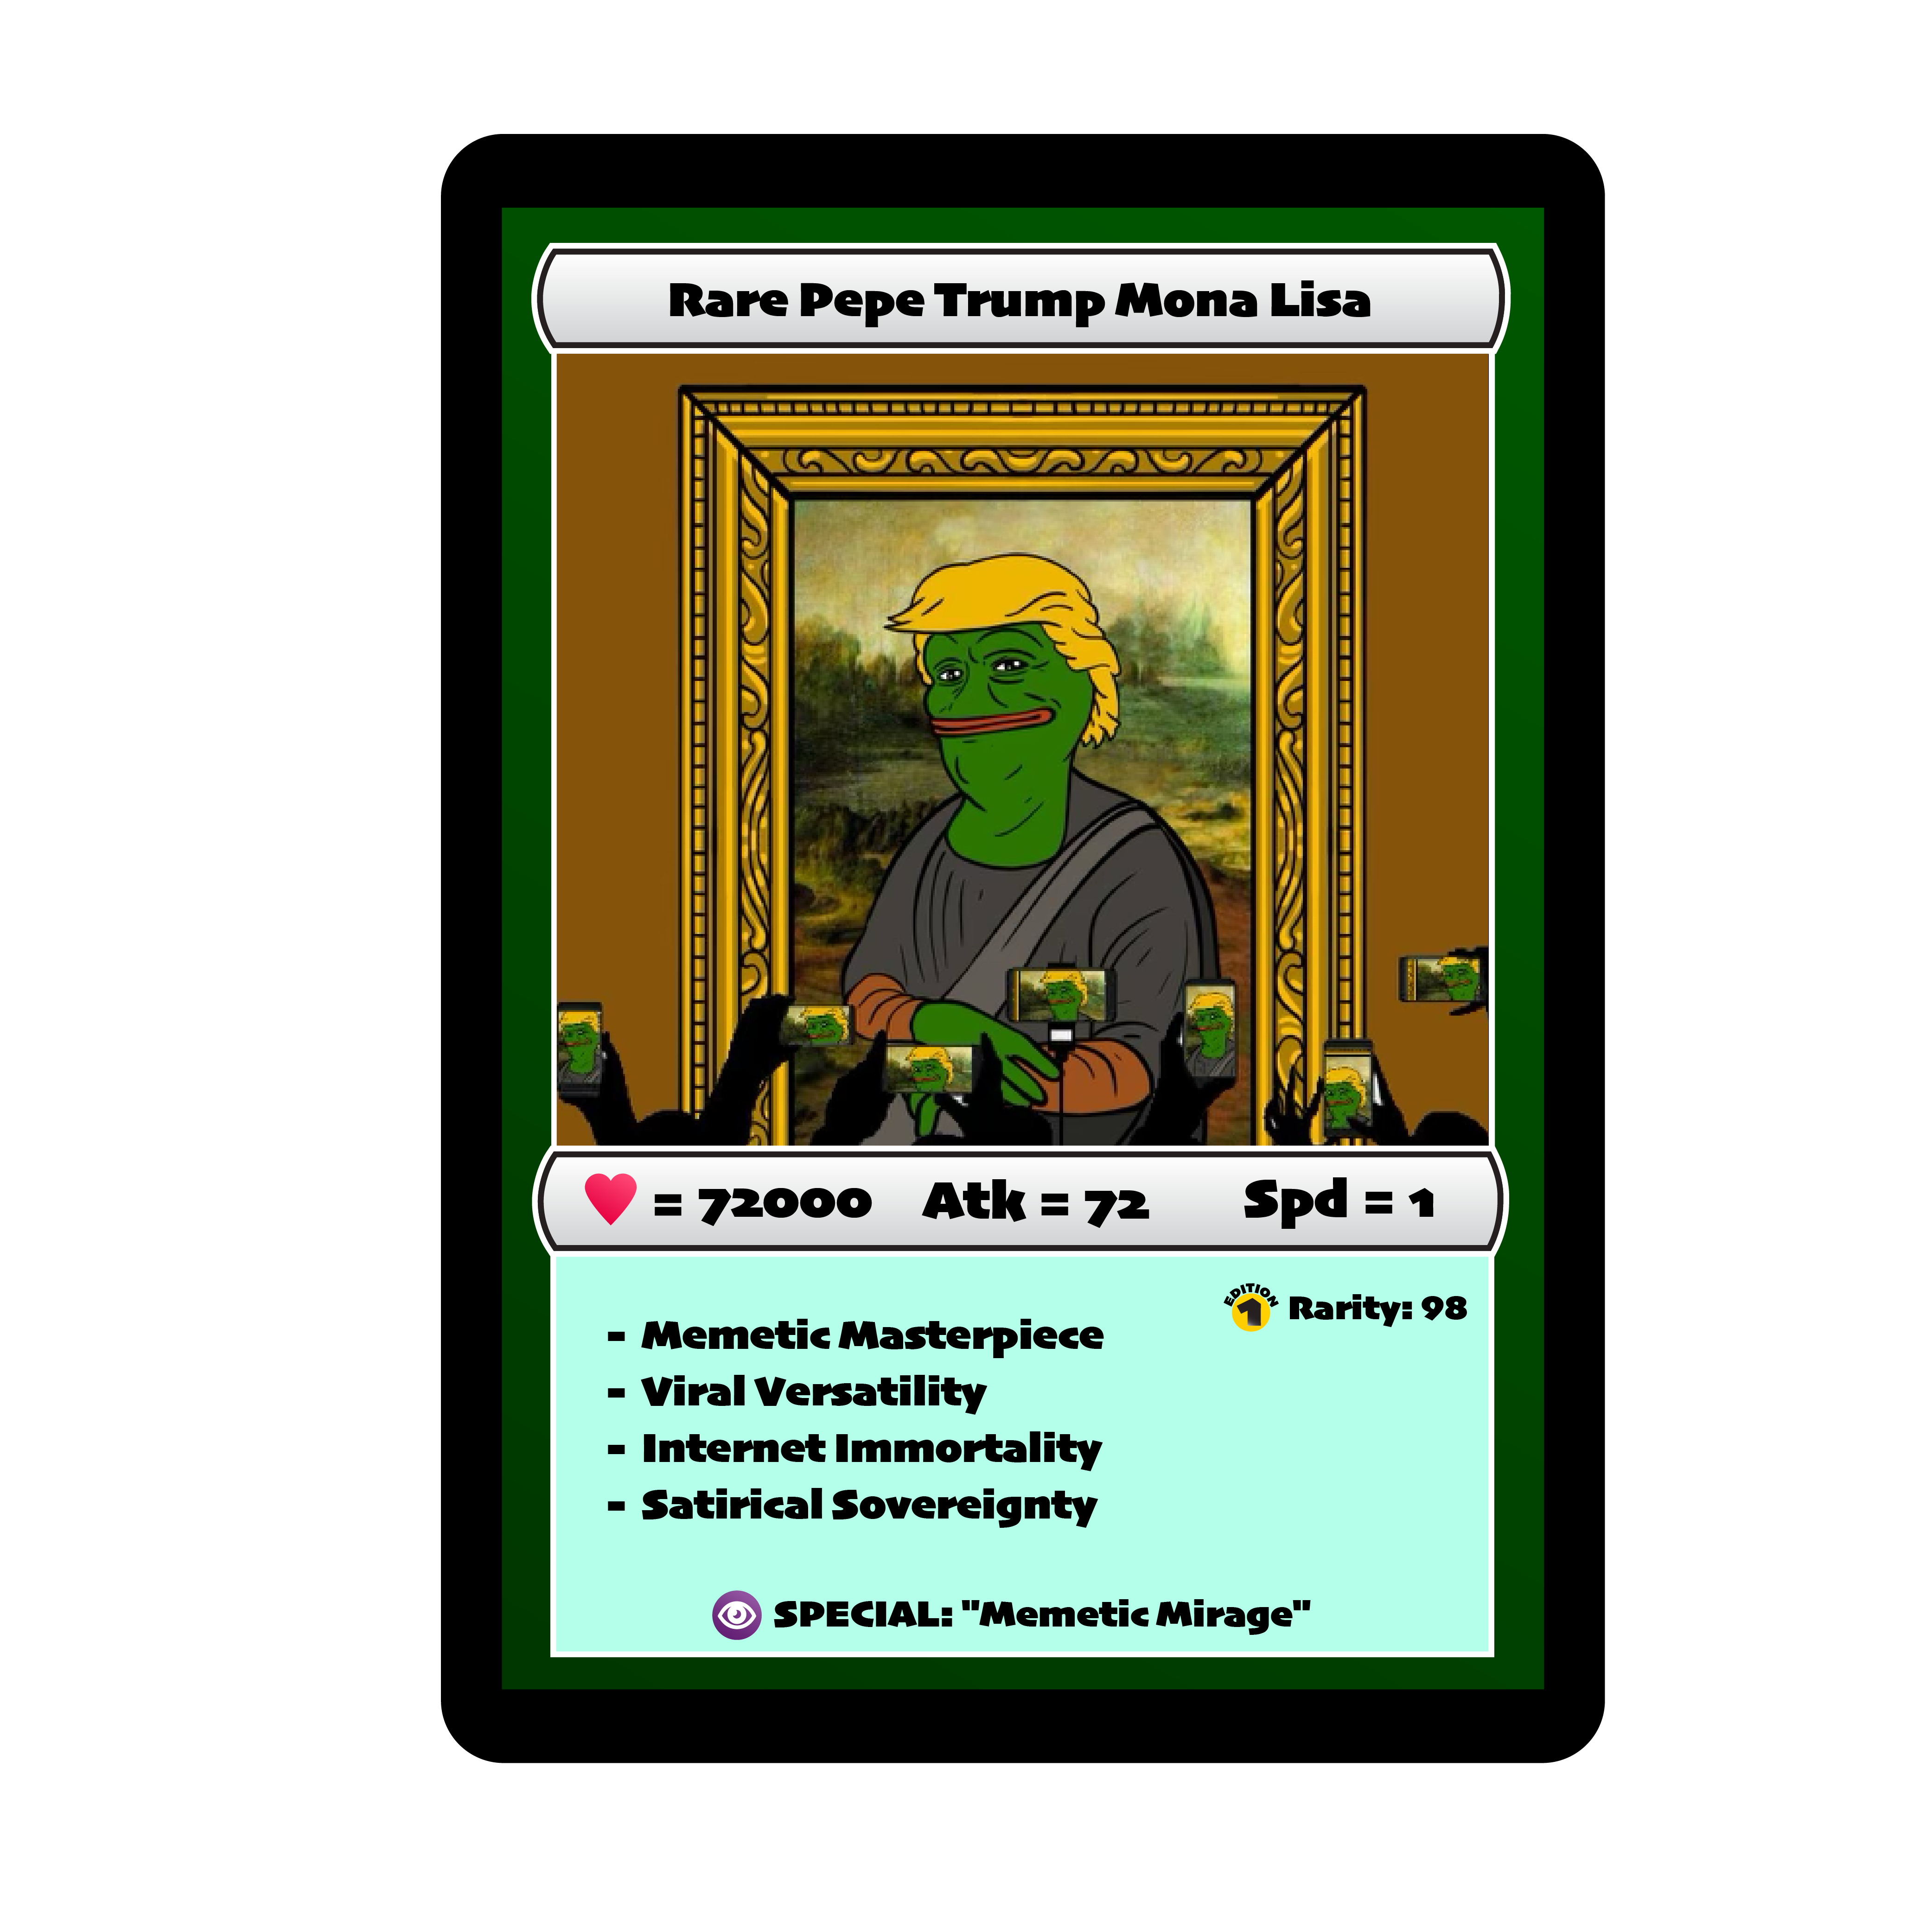 Rare Pepe Trump Mona Lisa